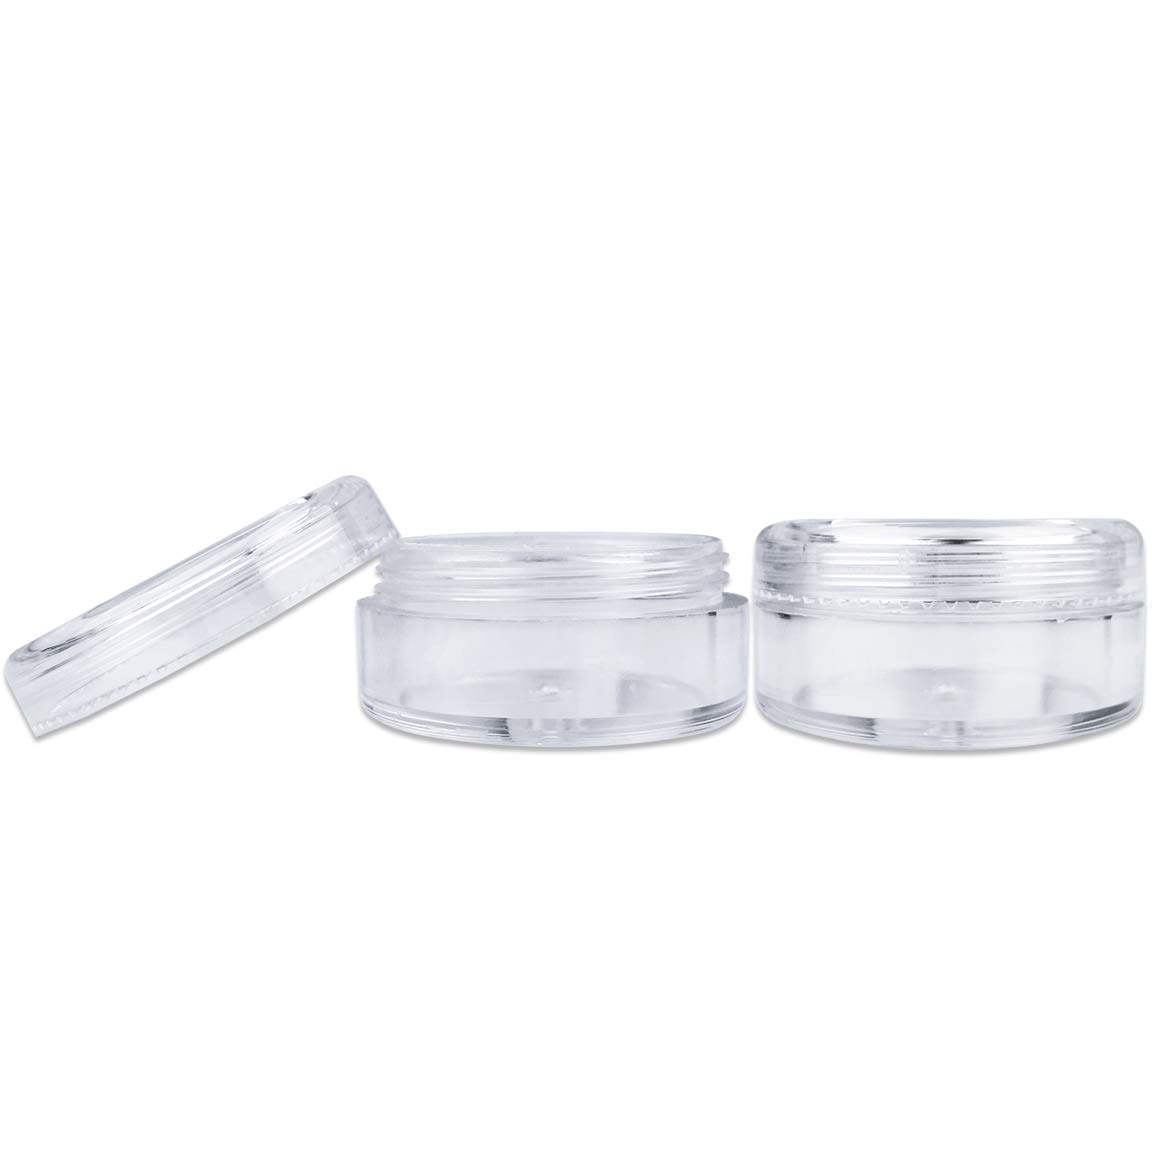 (Quantity: 25 Pieces) Beauticom 5G/5ML Round Clear Jars with Screw Cap Lids for Lotion, Creams, Toners, Lip Balms, Makeup Samples